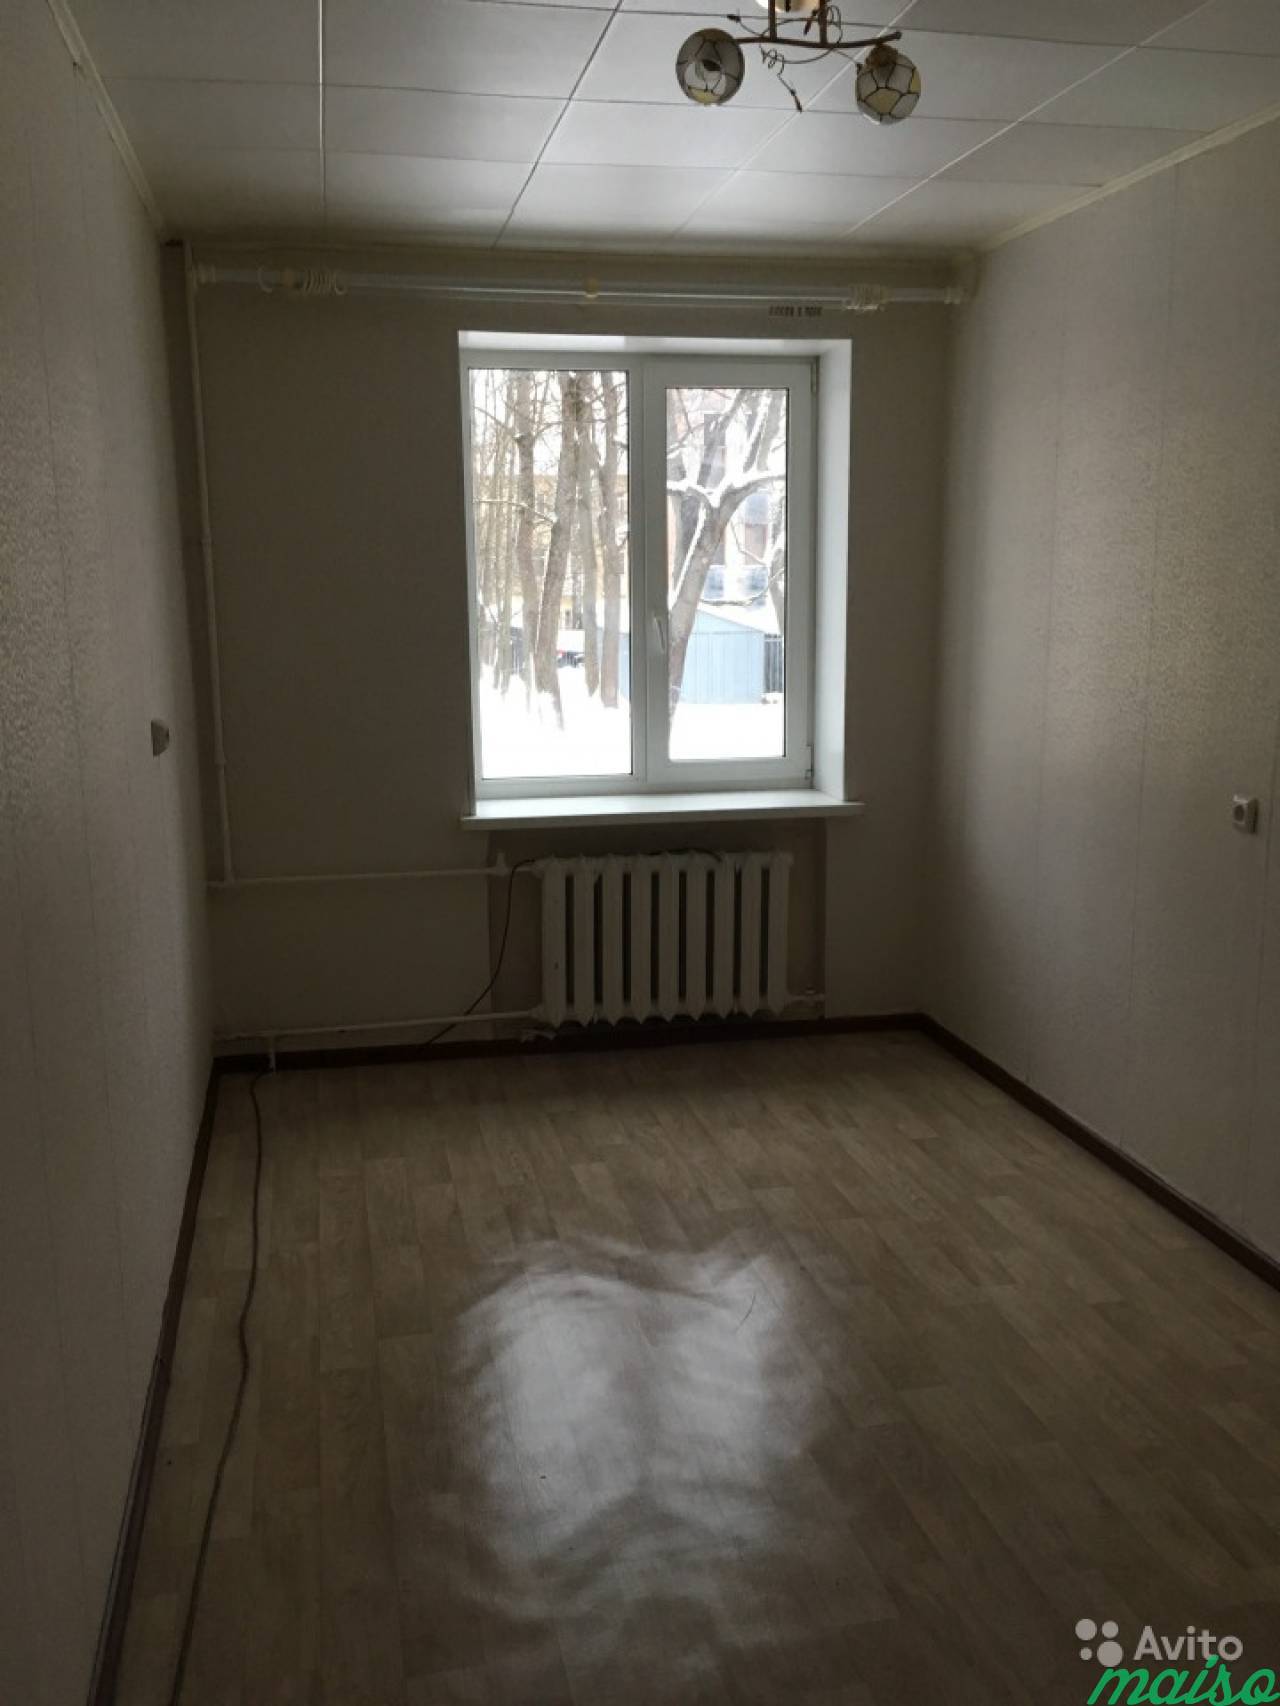 Комната 11.7 м² в 3-к, 1/3 эт. в Санкт-Петербурге. Фото 3